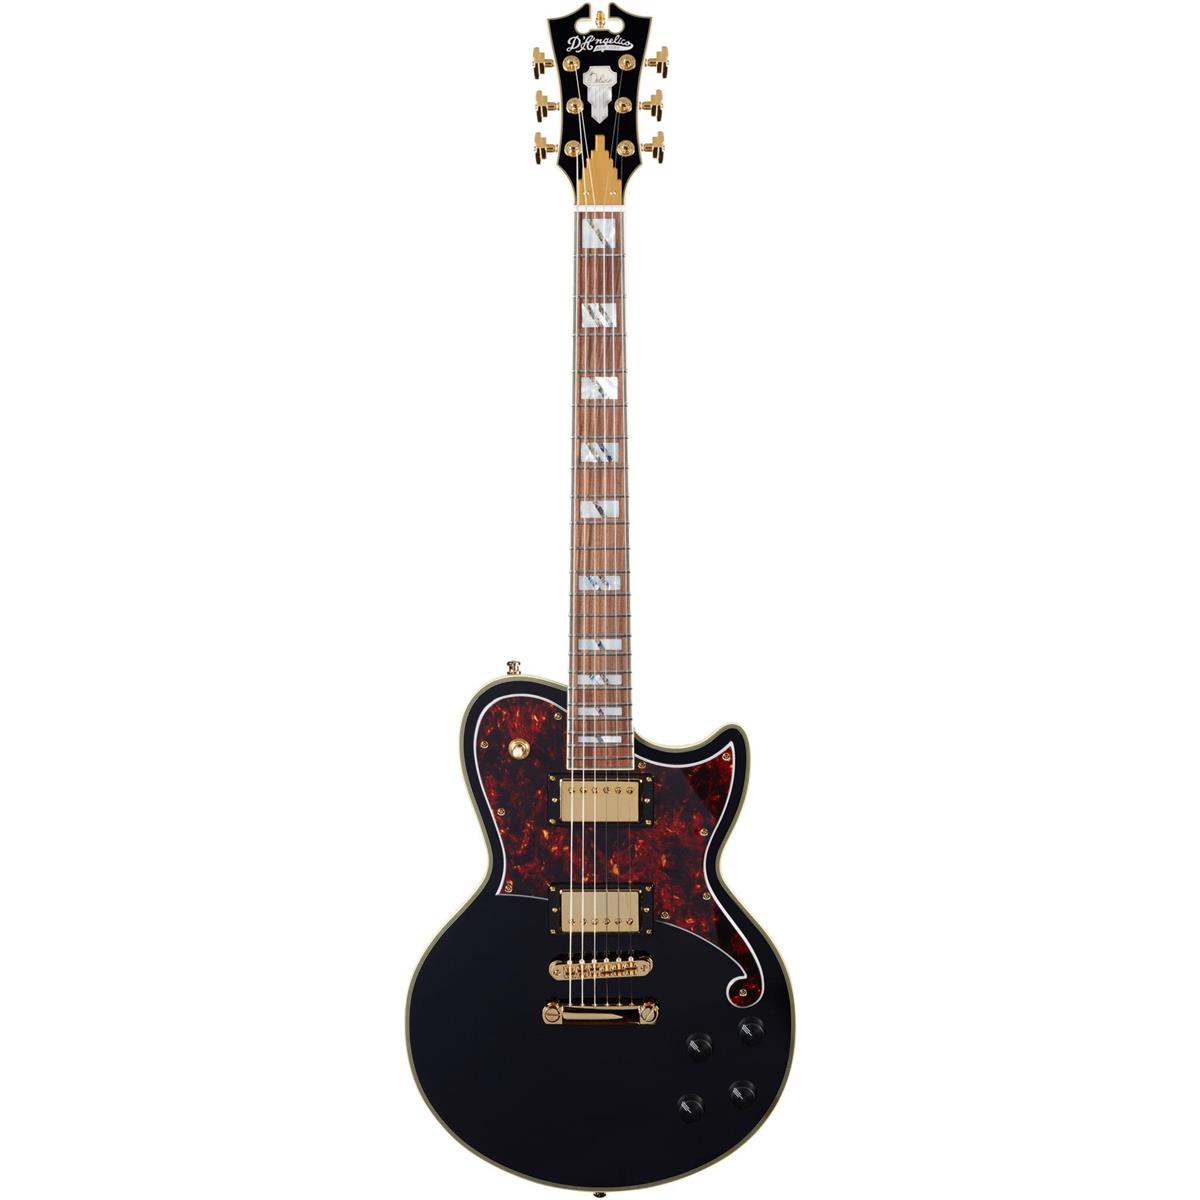 D'Angelico Guitars Deluxe Atlantic Single Cutaway Solid Body Ebony Guitar, Black -  DADATLSBKGS